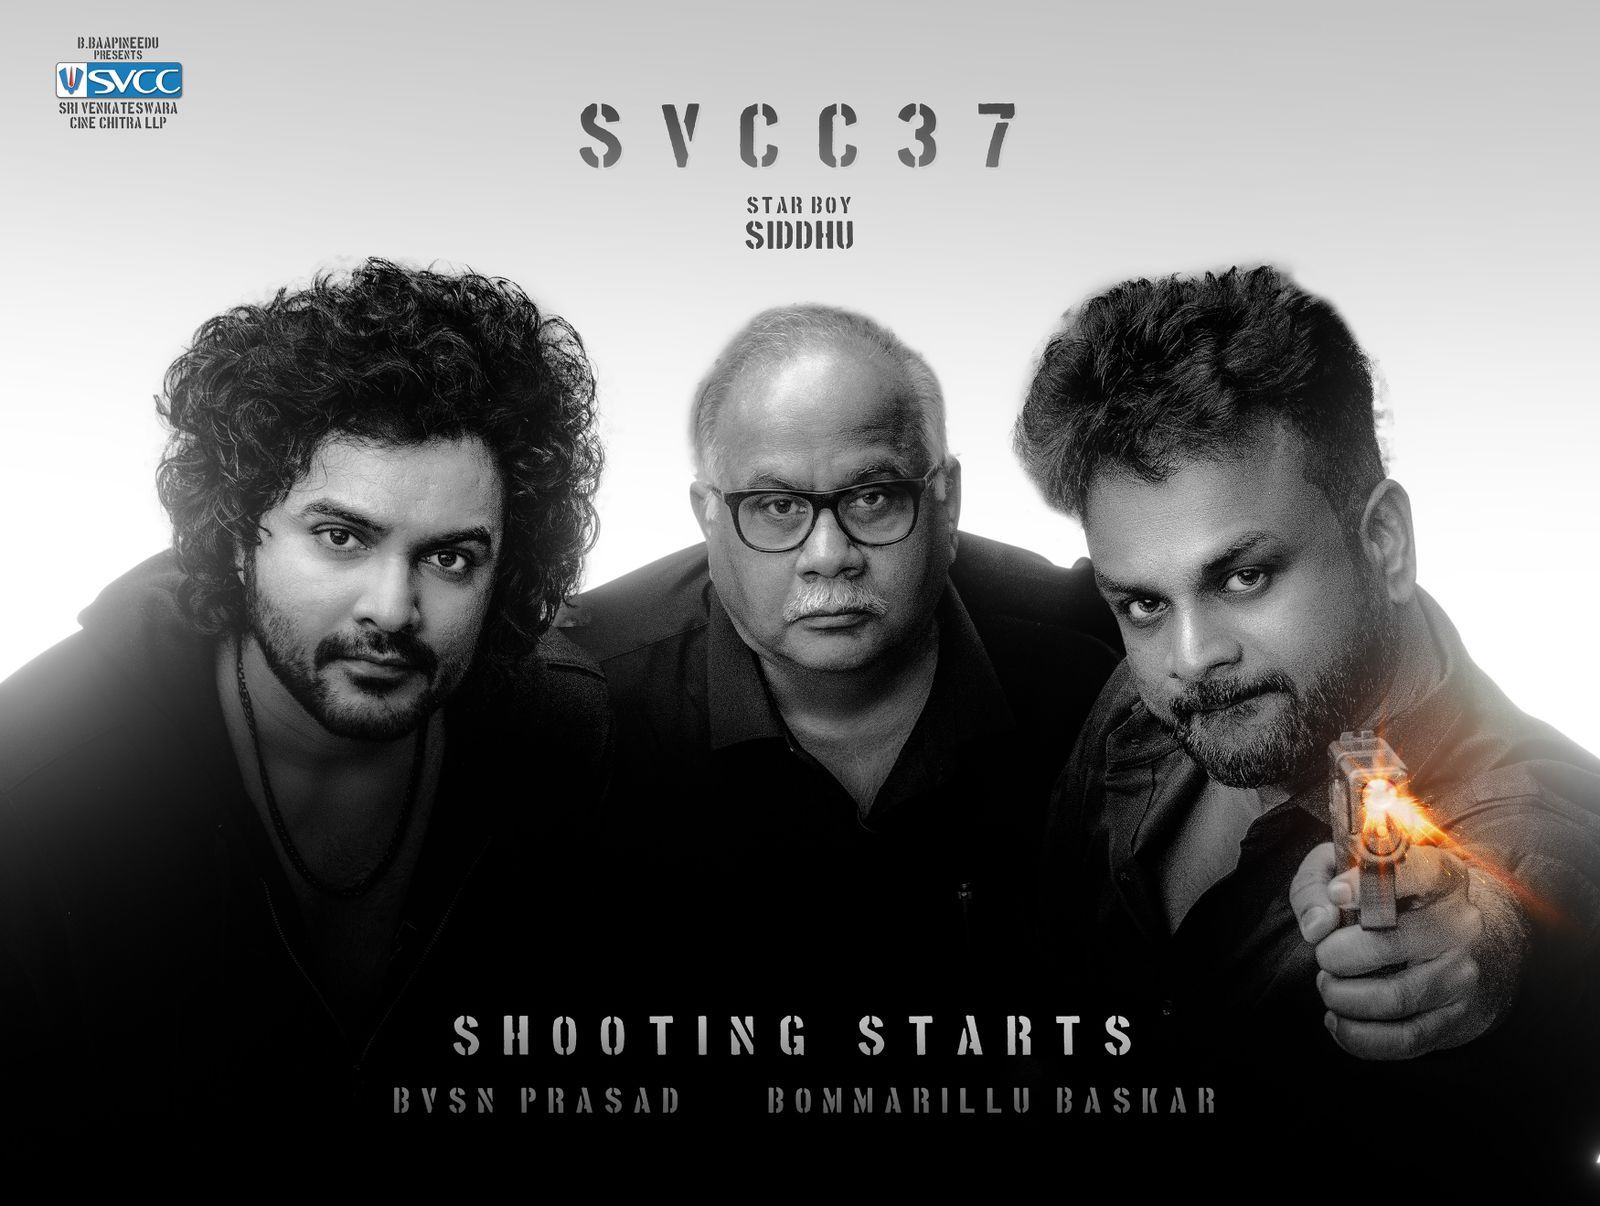 Siddhu Jonnalagadda Movie SVCC37 shoot begins